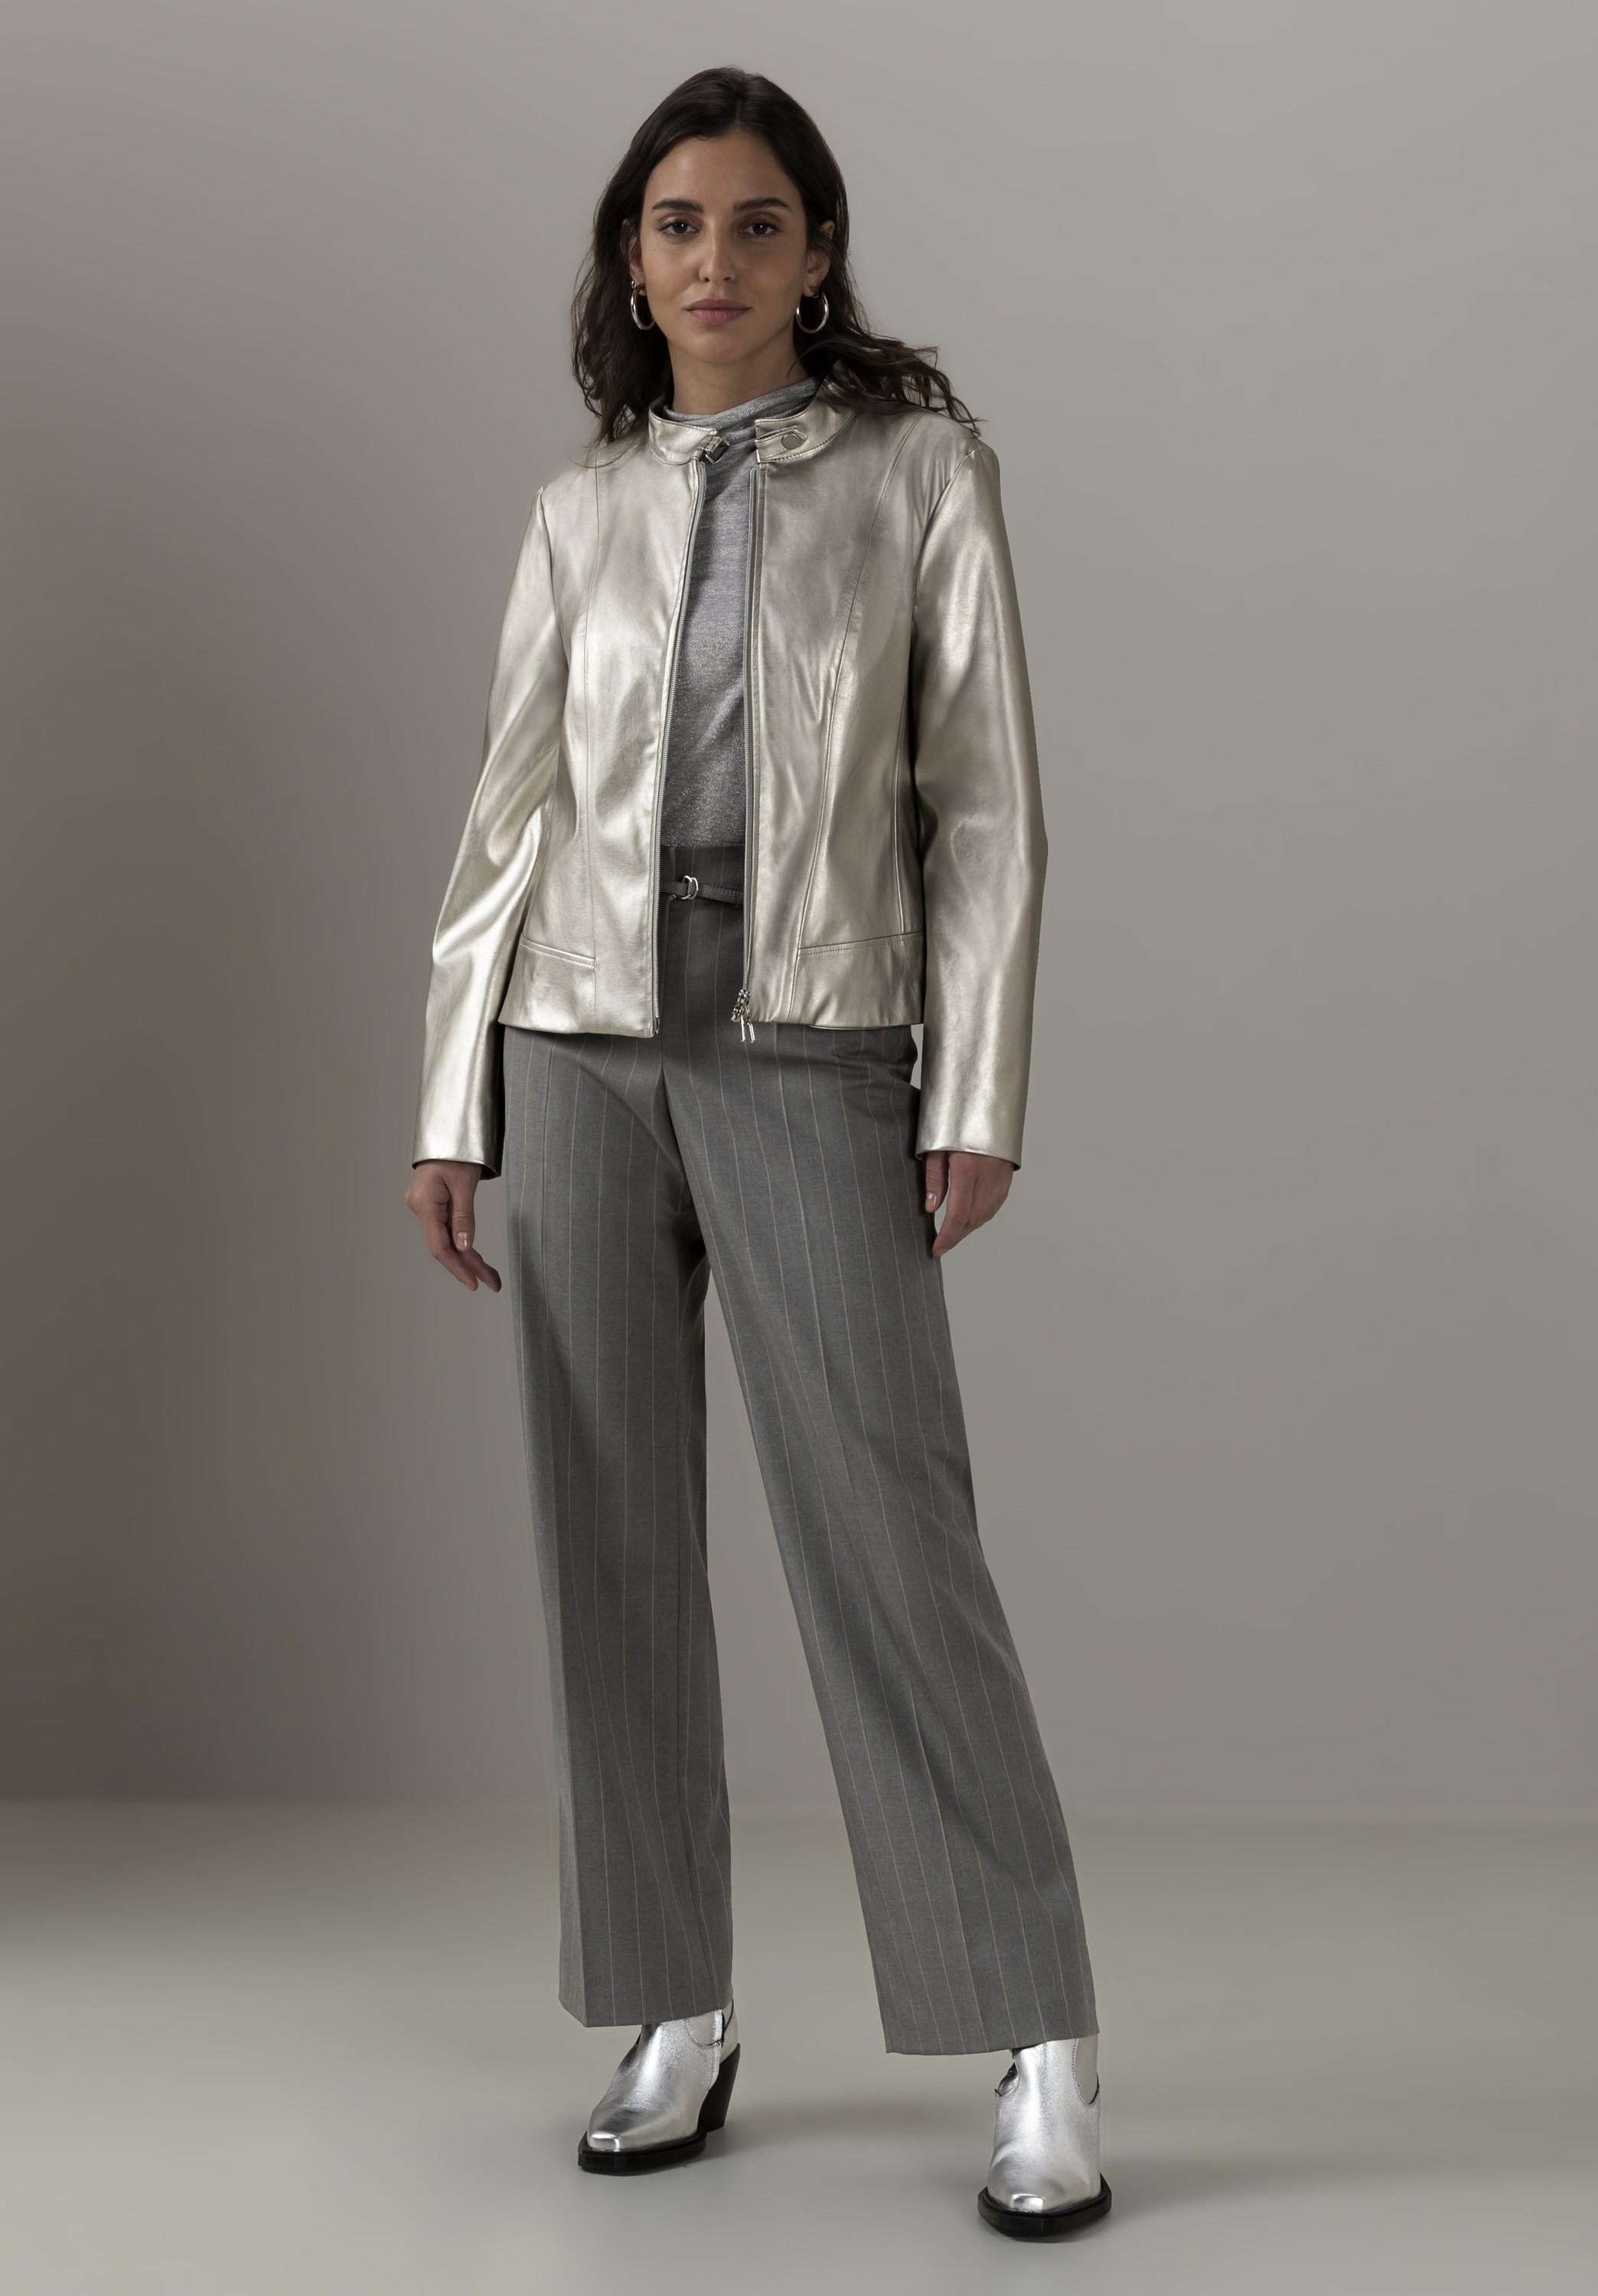 Jerseyware in oxyd Langarmshirt schimmernder modernen Look melange GRETA bianca aus